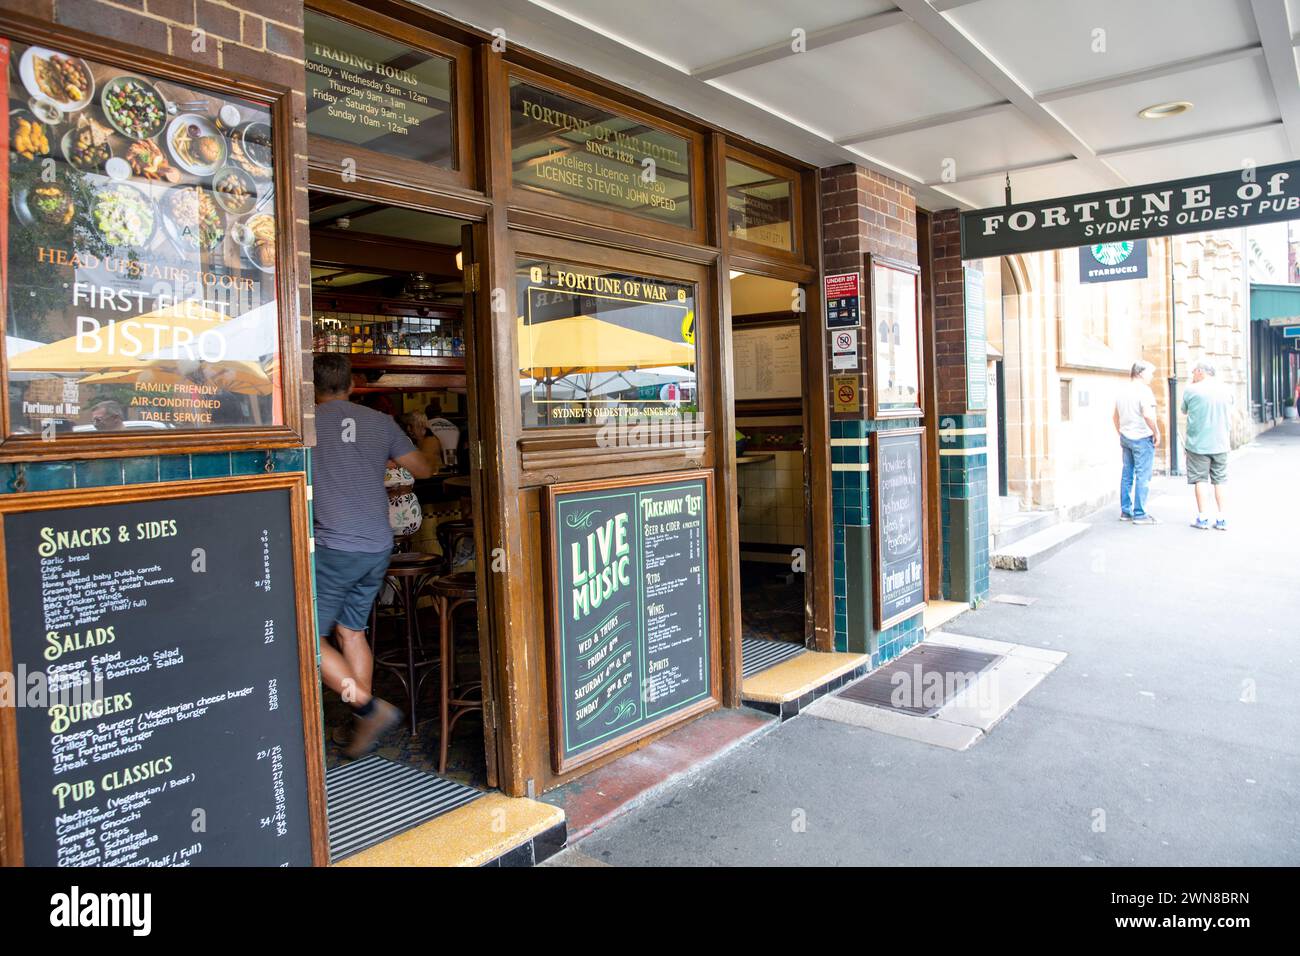 Fortune of War pub in Sydney, Sydney's oldest public house Inn in the Rocks area of Sydney city centre,NSW,Australia,2024 Stock Photo